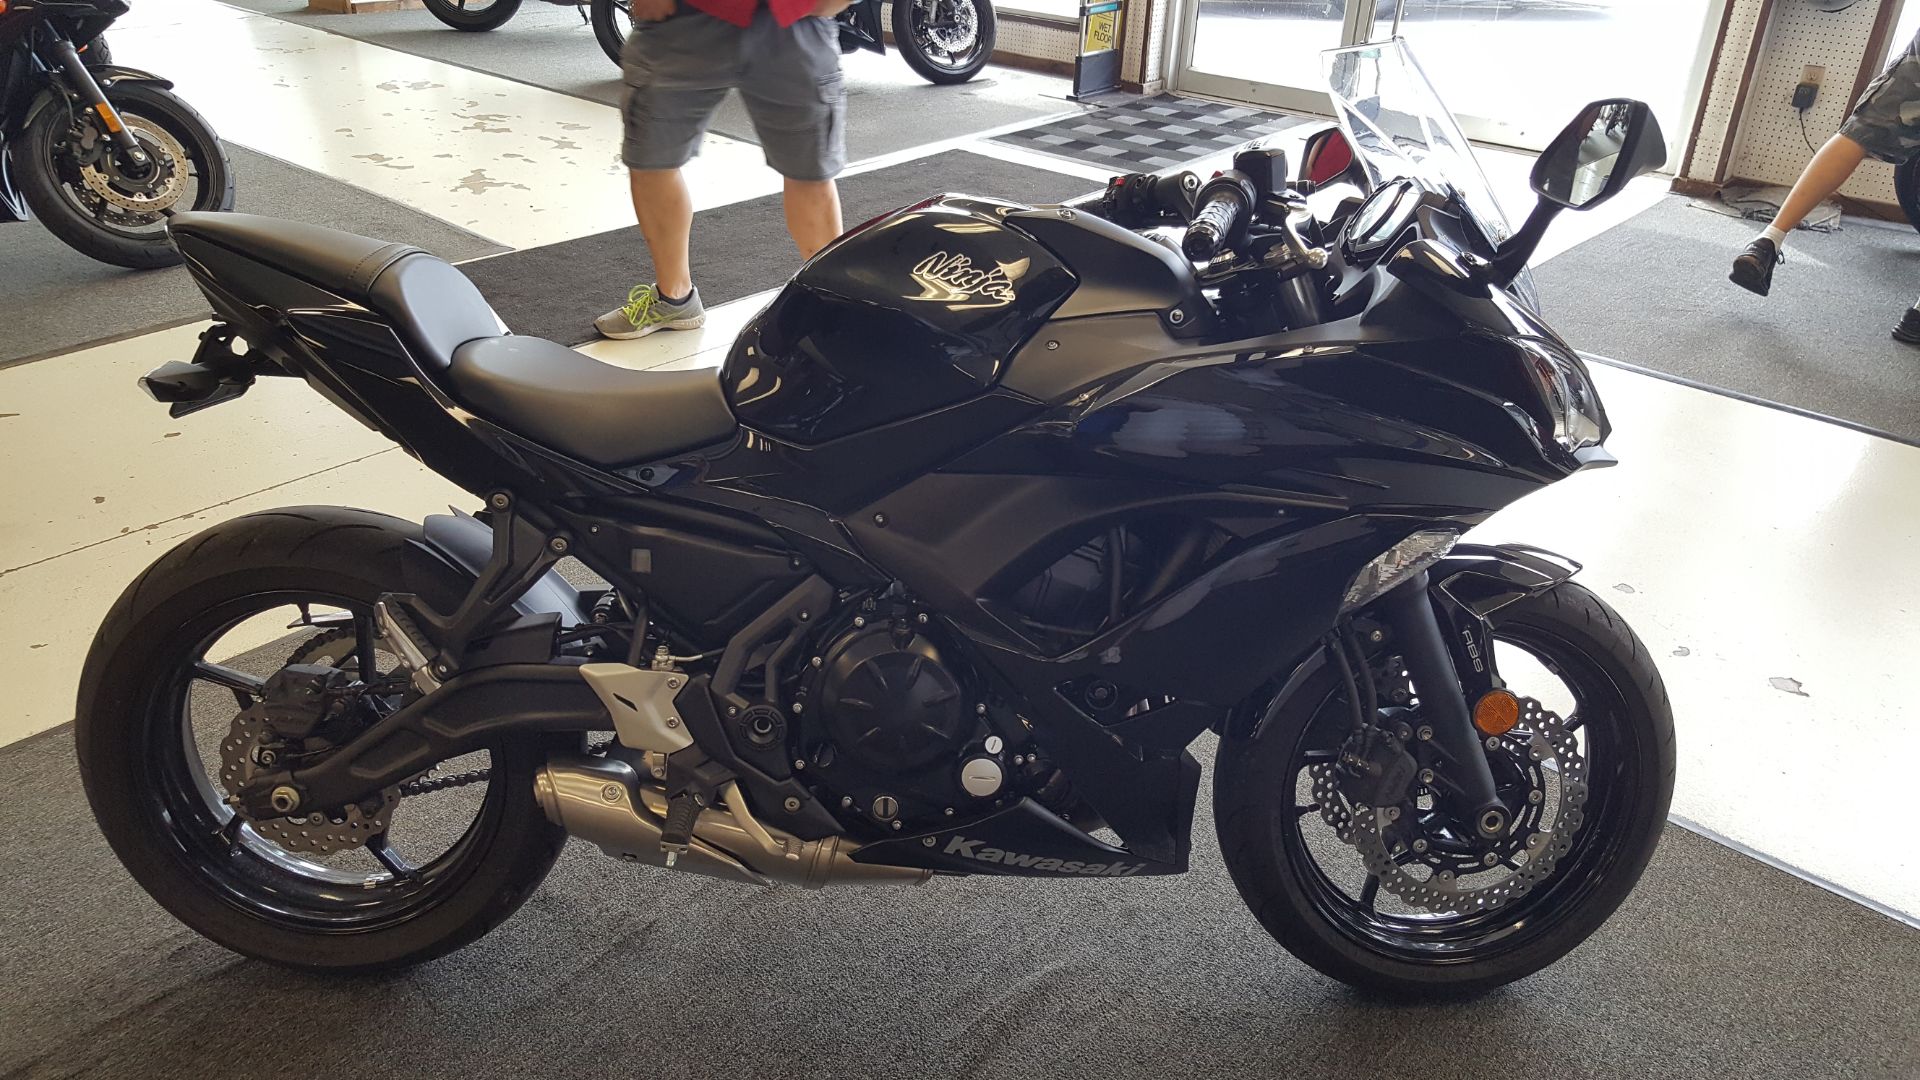 Hearty Ugyldigt Generelt sagt Used 2017 Kawasaki Ninja 650 ABS Motorcycles in Elkhart, IN | Stock Number:  N/A.